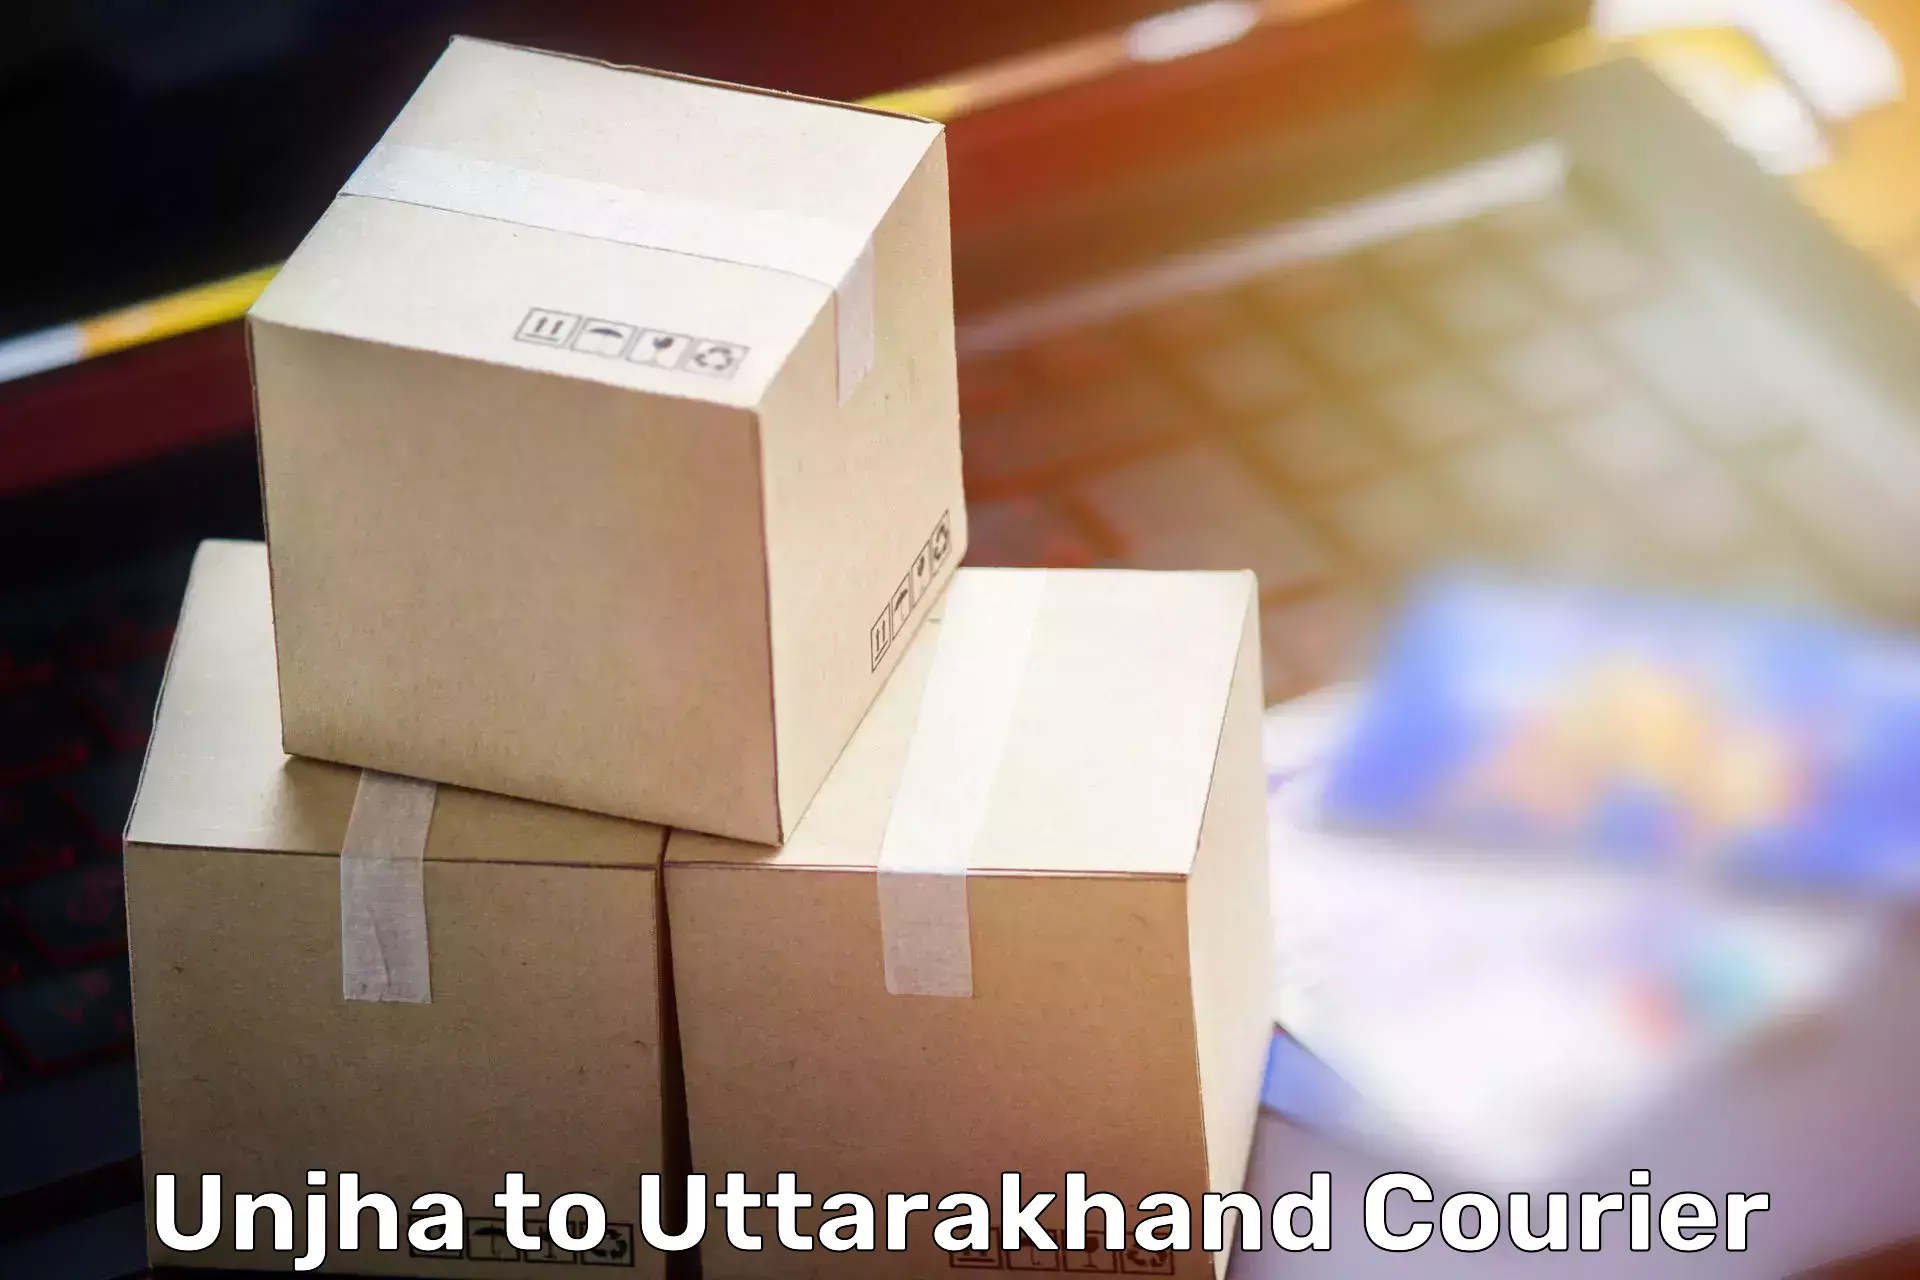 Specialized moving company Unjha to Rishikesh